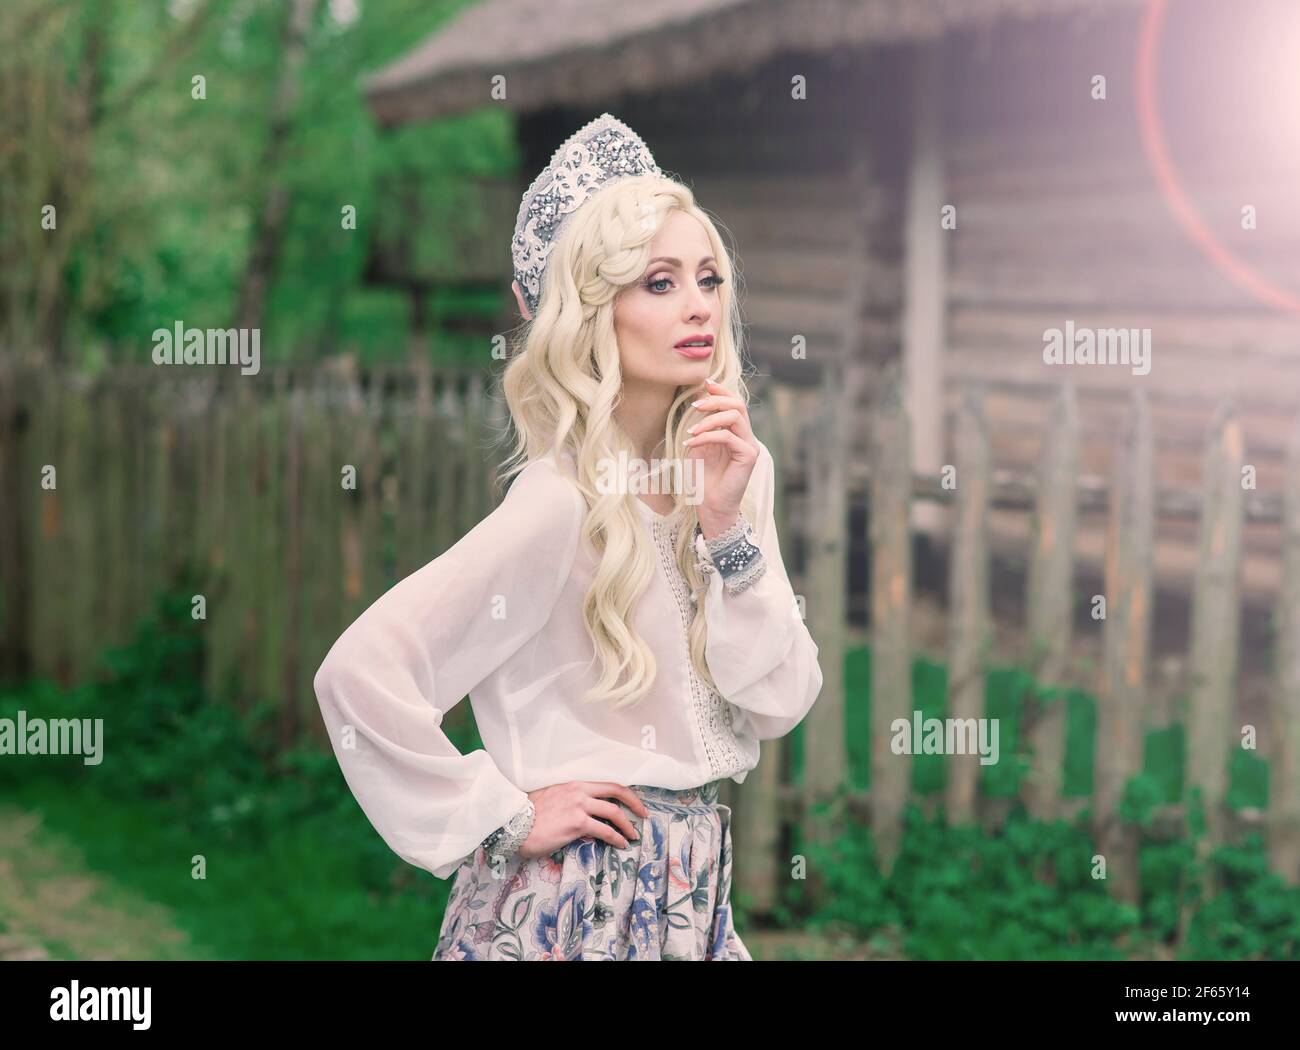 https://c8.alamy.com/comp/2F65Y14/young-female-of-slavic-appearance-with-crown-kokoshnik-on-the-midsummer-village-homestead-2F65Y14.jpg